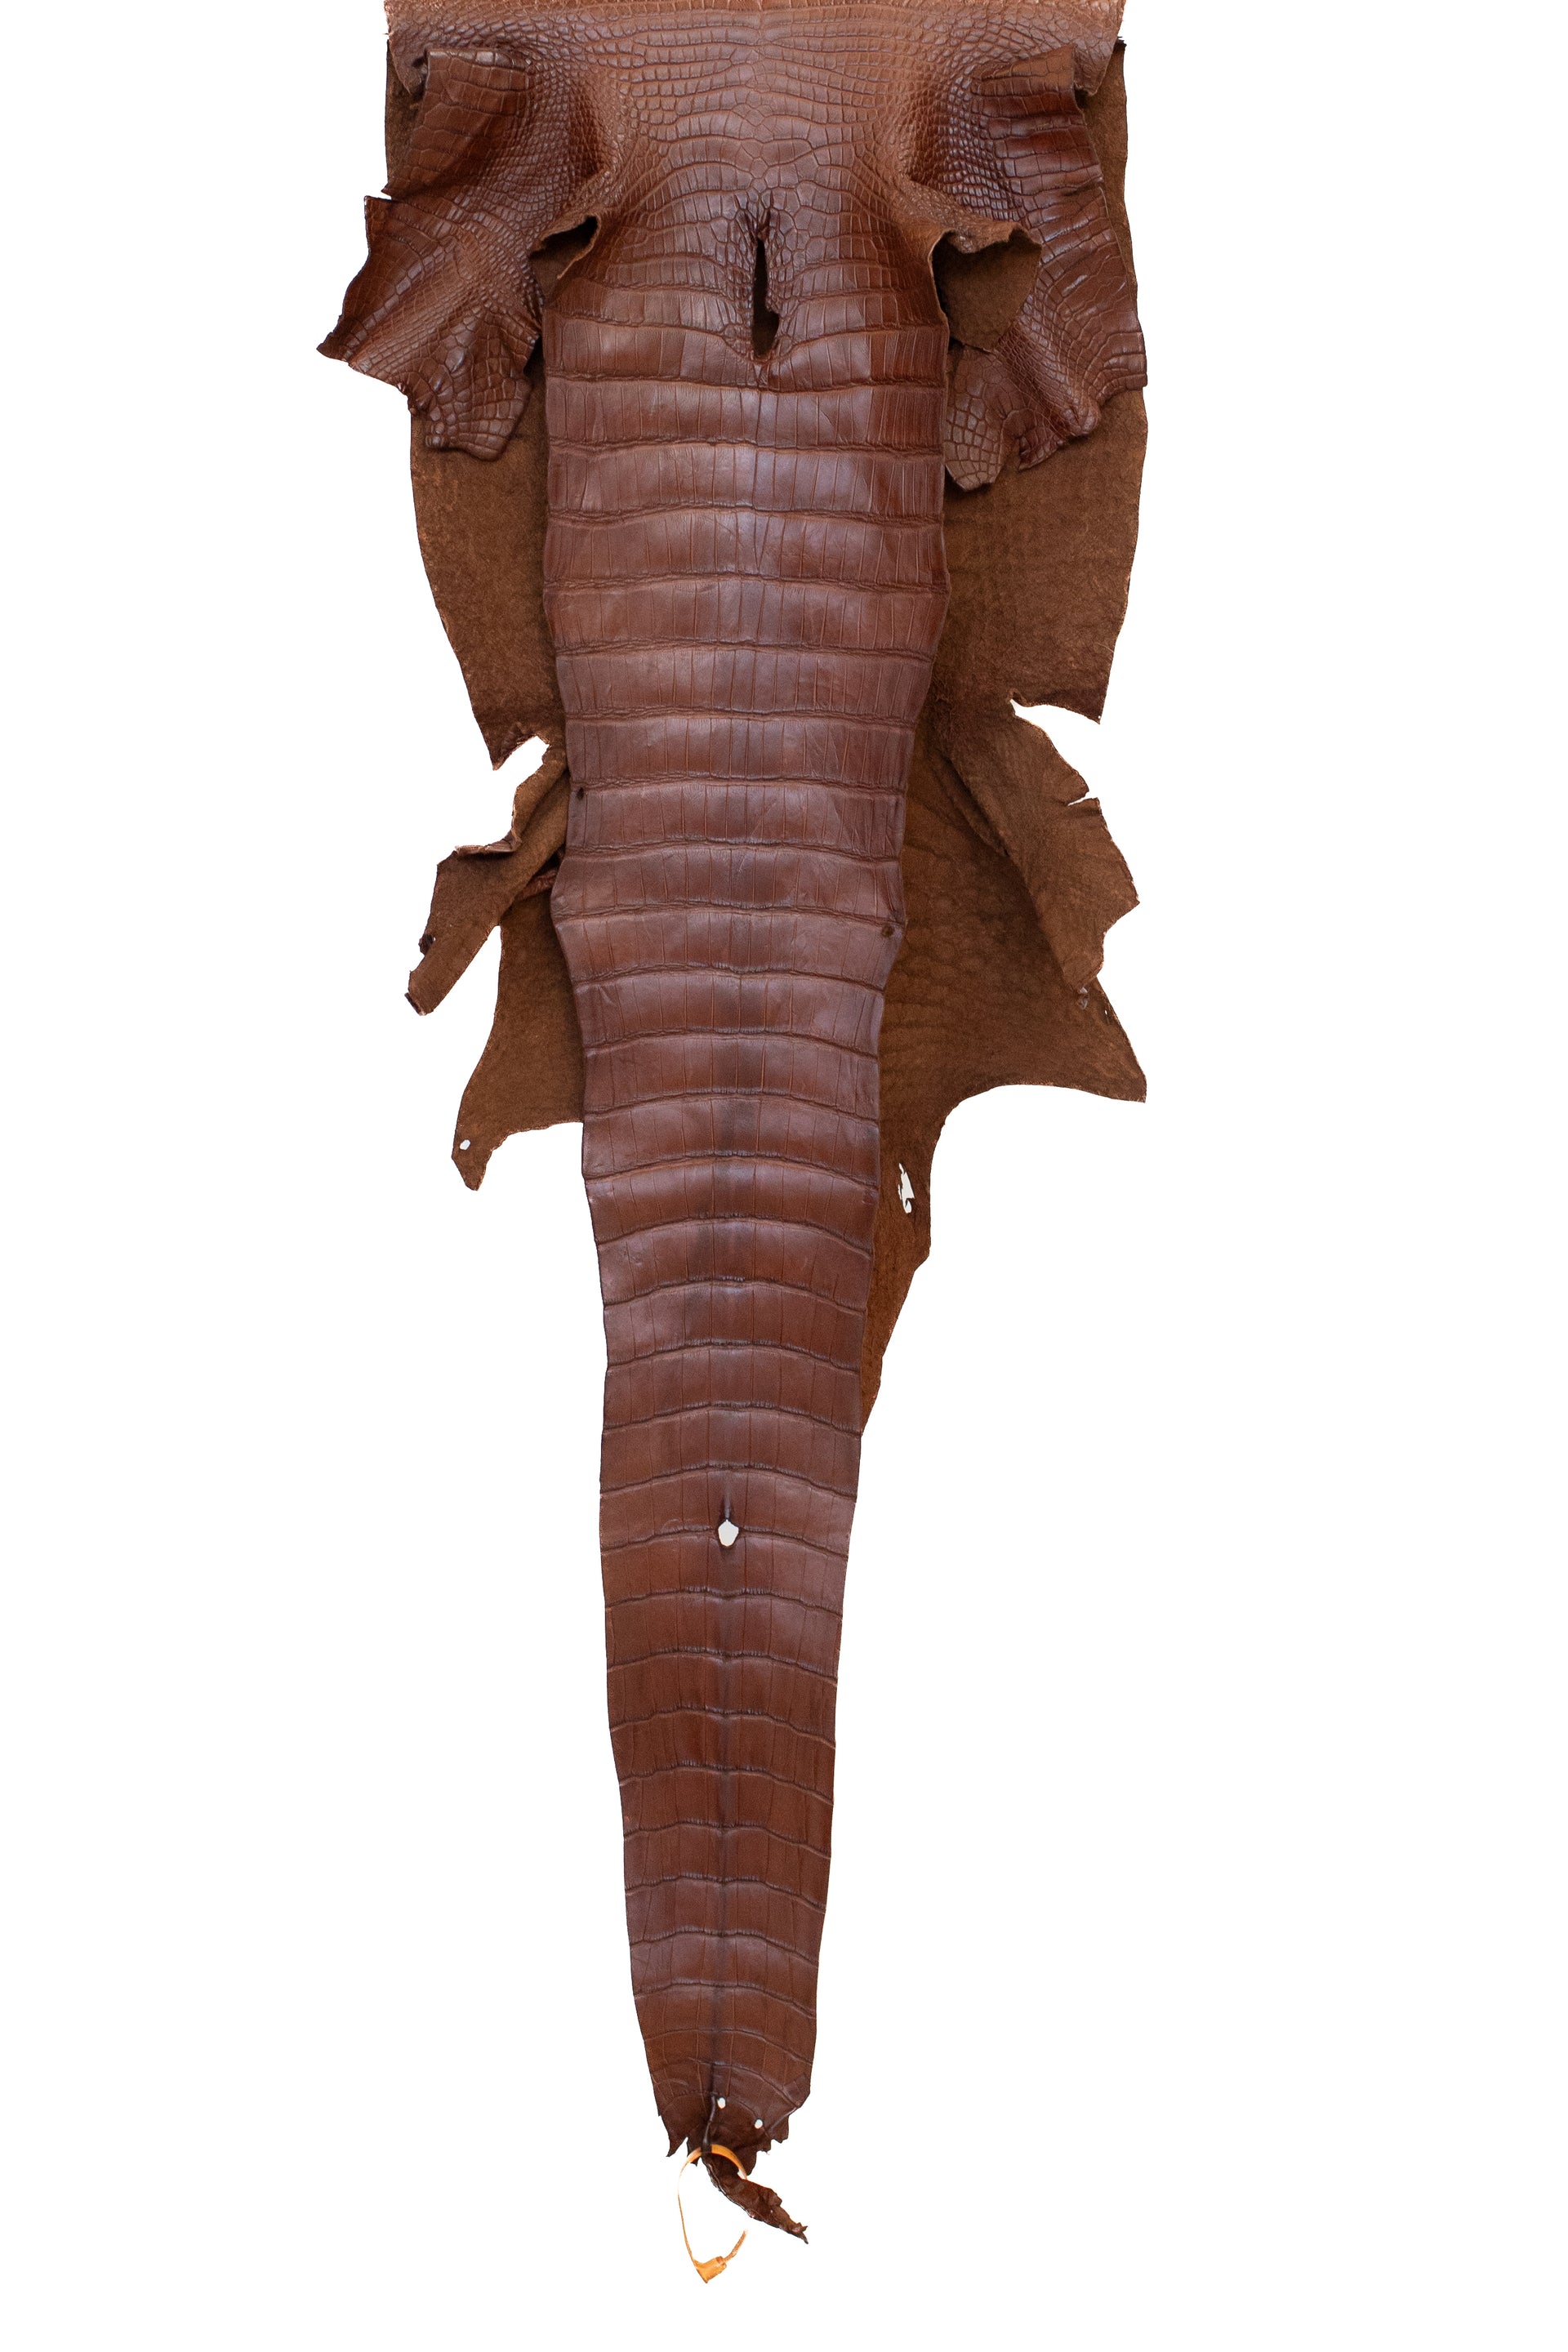 41 cm Grade 3/4 Cigar Matte Wild American Alligator Leather - Tag: FL23-0078265